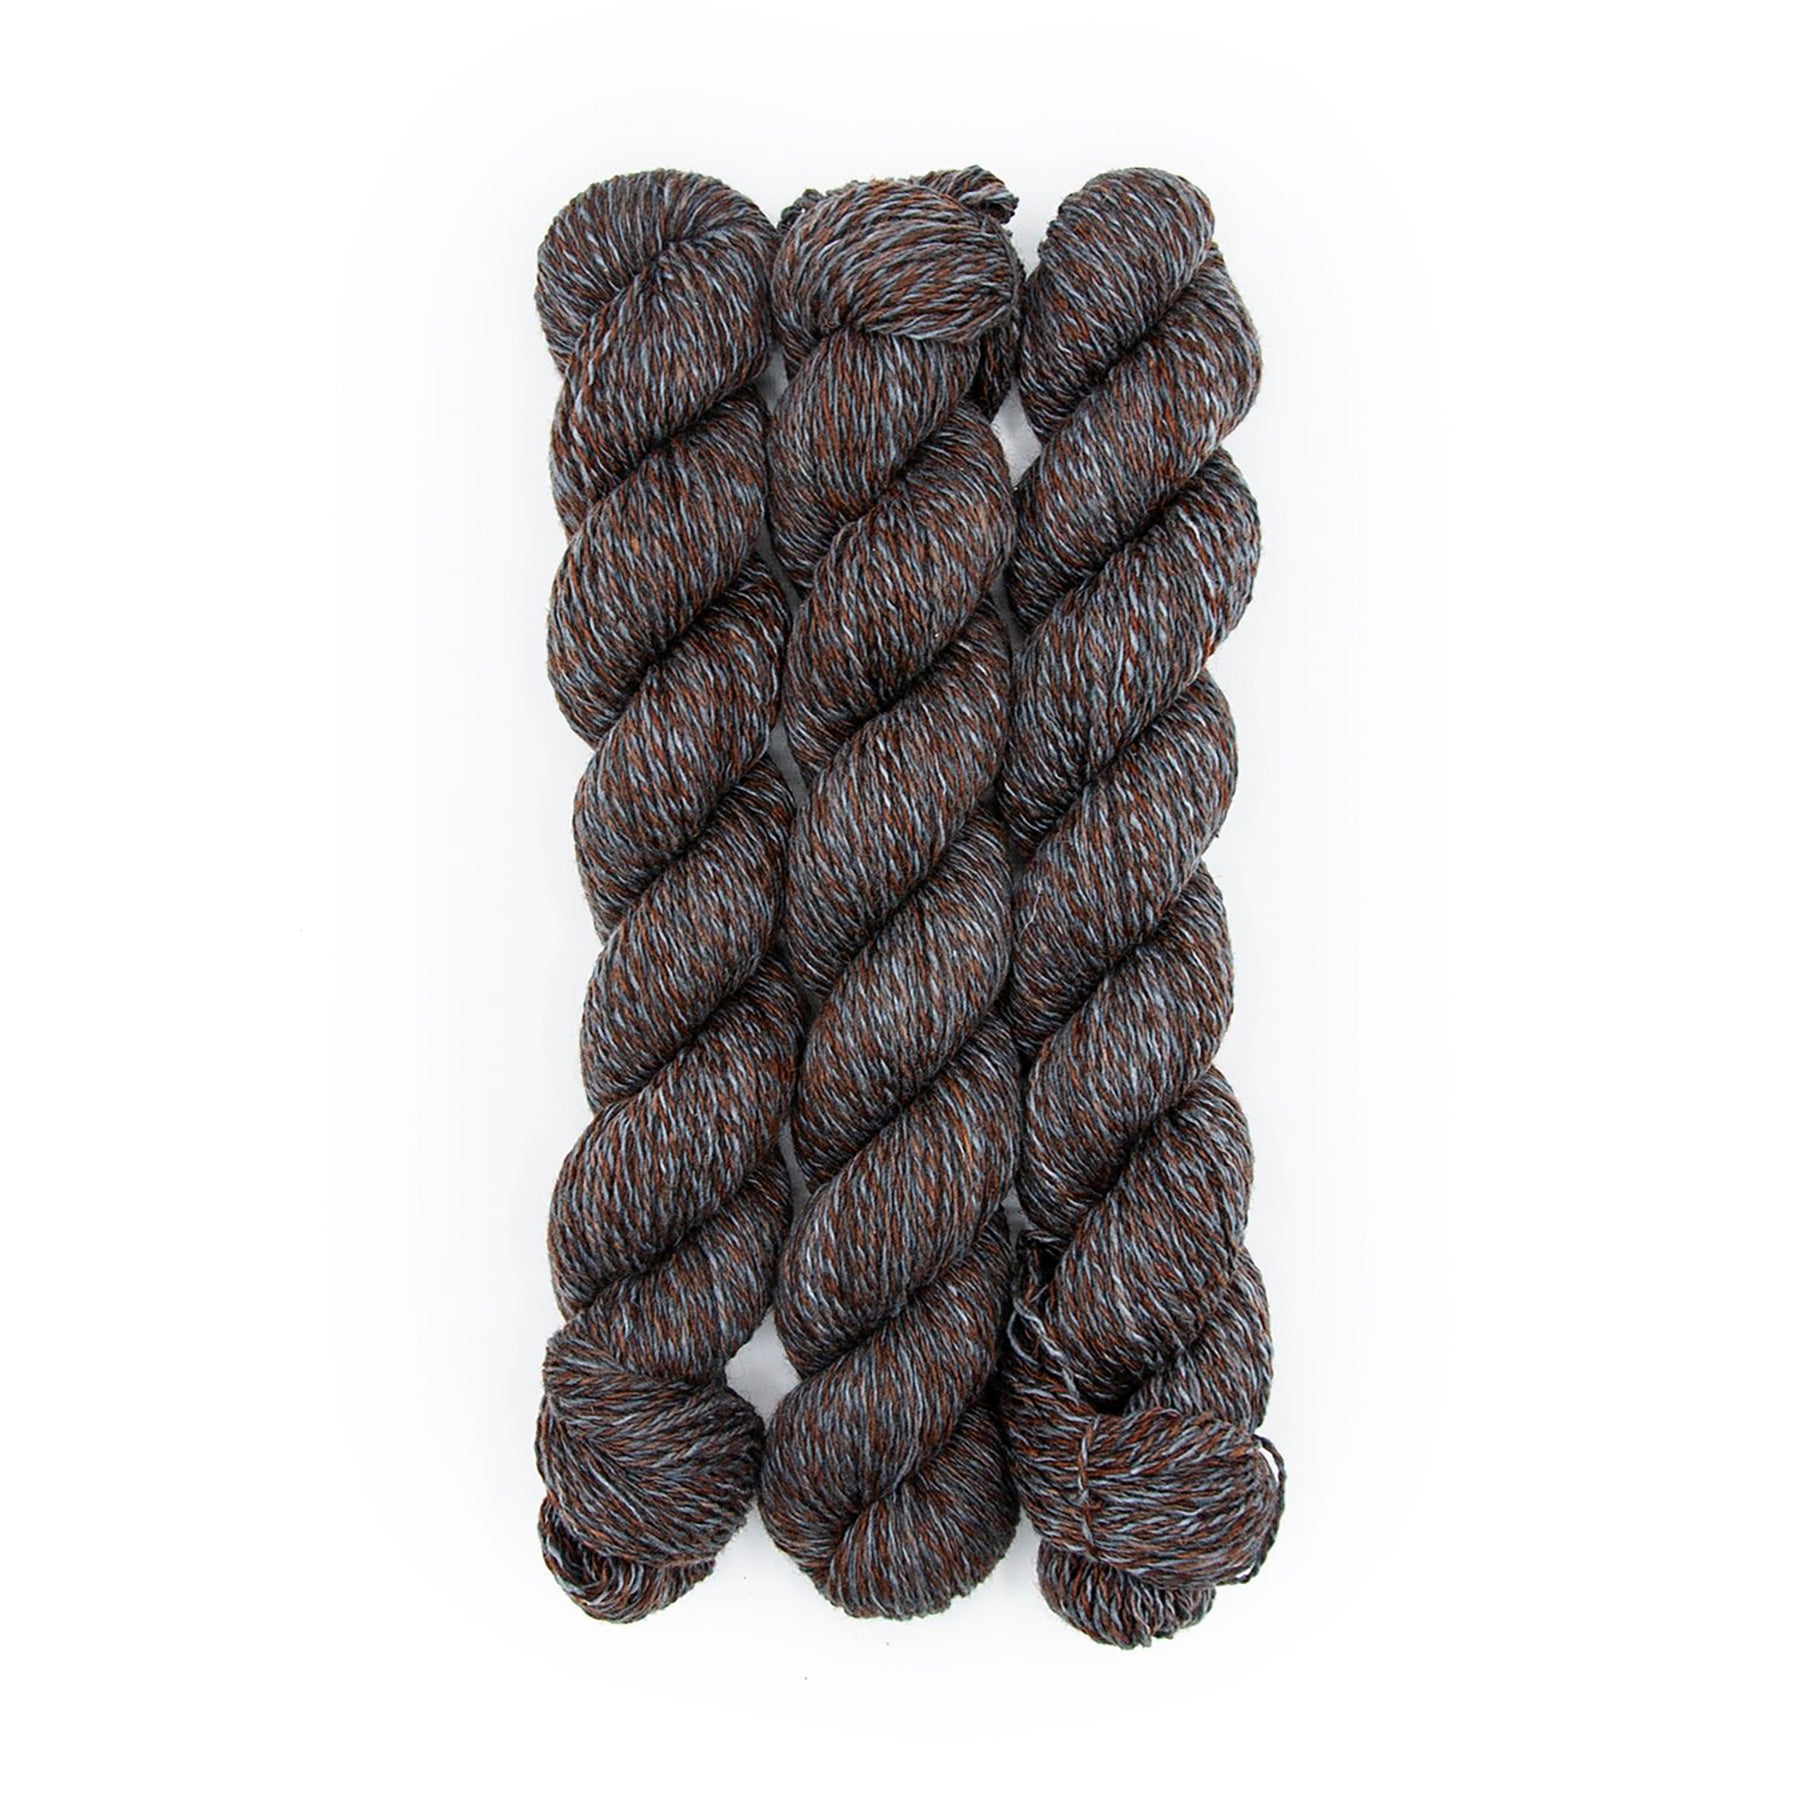 Plied Yarn North Ave Great Blacks in Wax a marled yarn with grey, denim and dark brown colors.